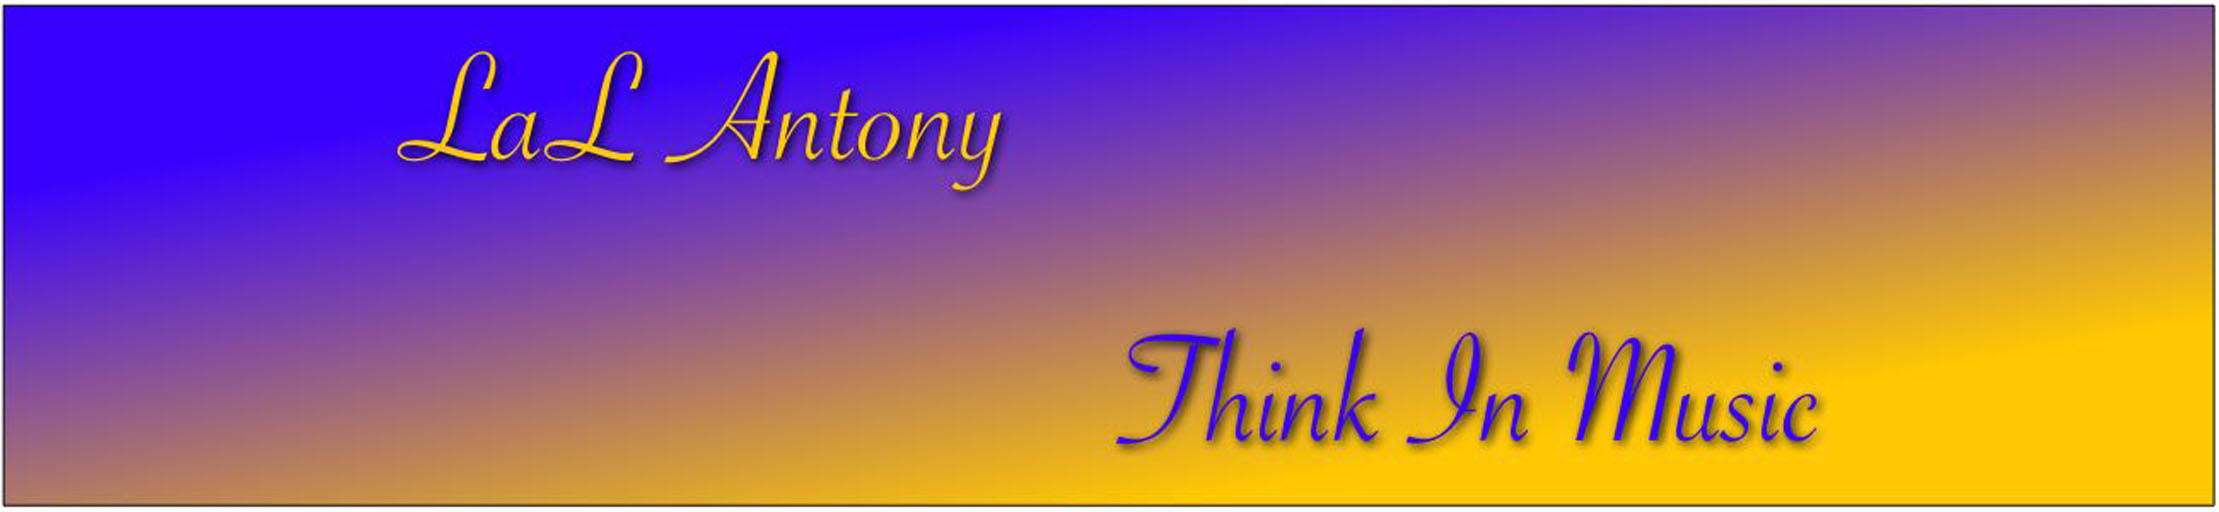 Think in Music - LaL Antony-2048x512.jpg